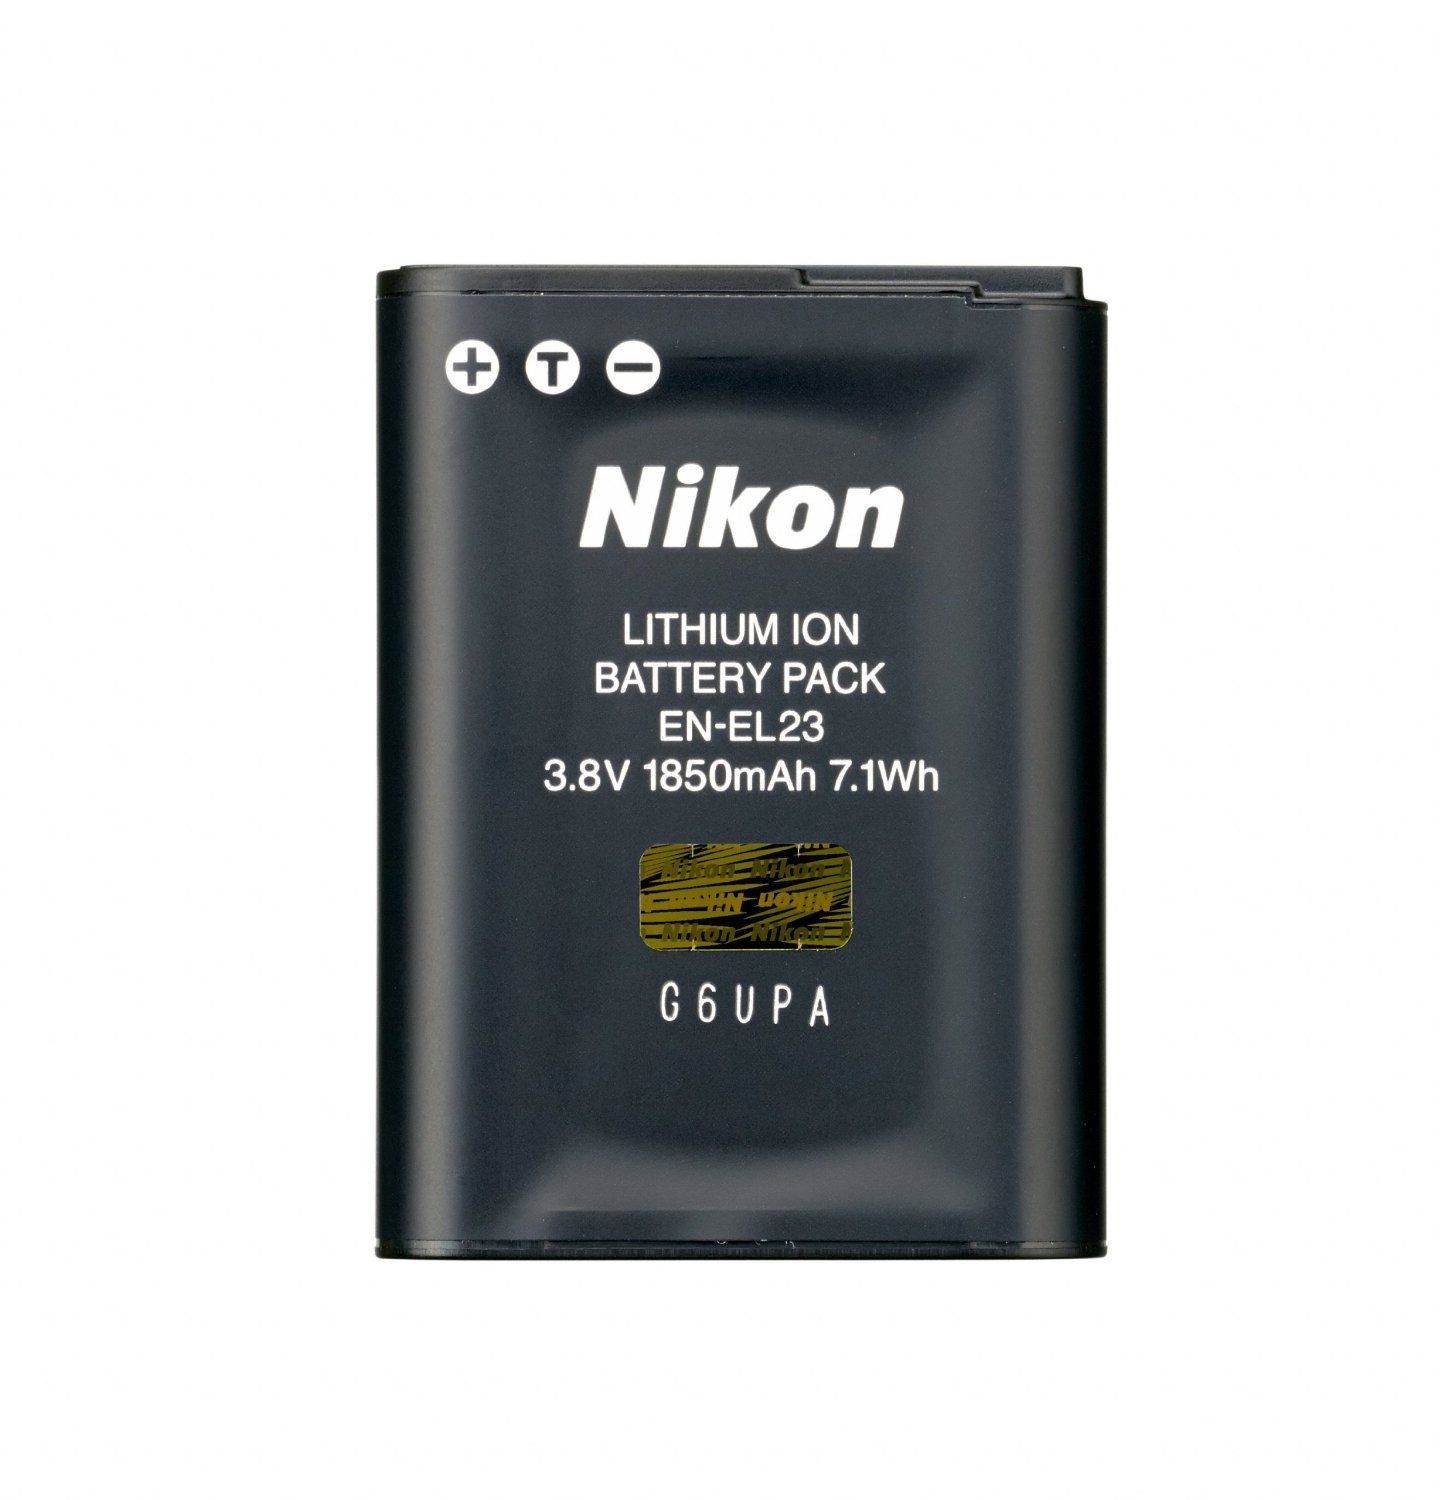 Nikon EN-EL23 Rechargeable Li-ion battery